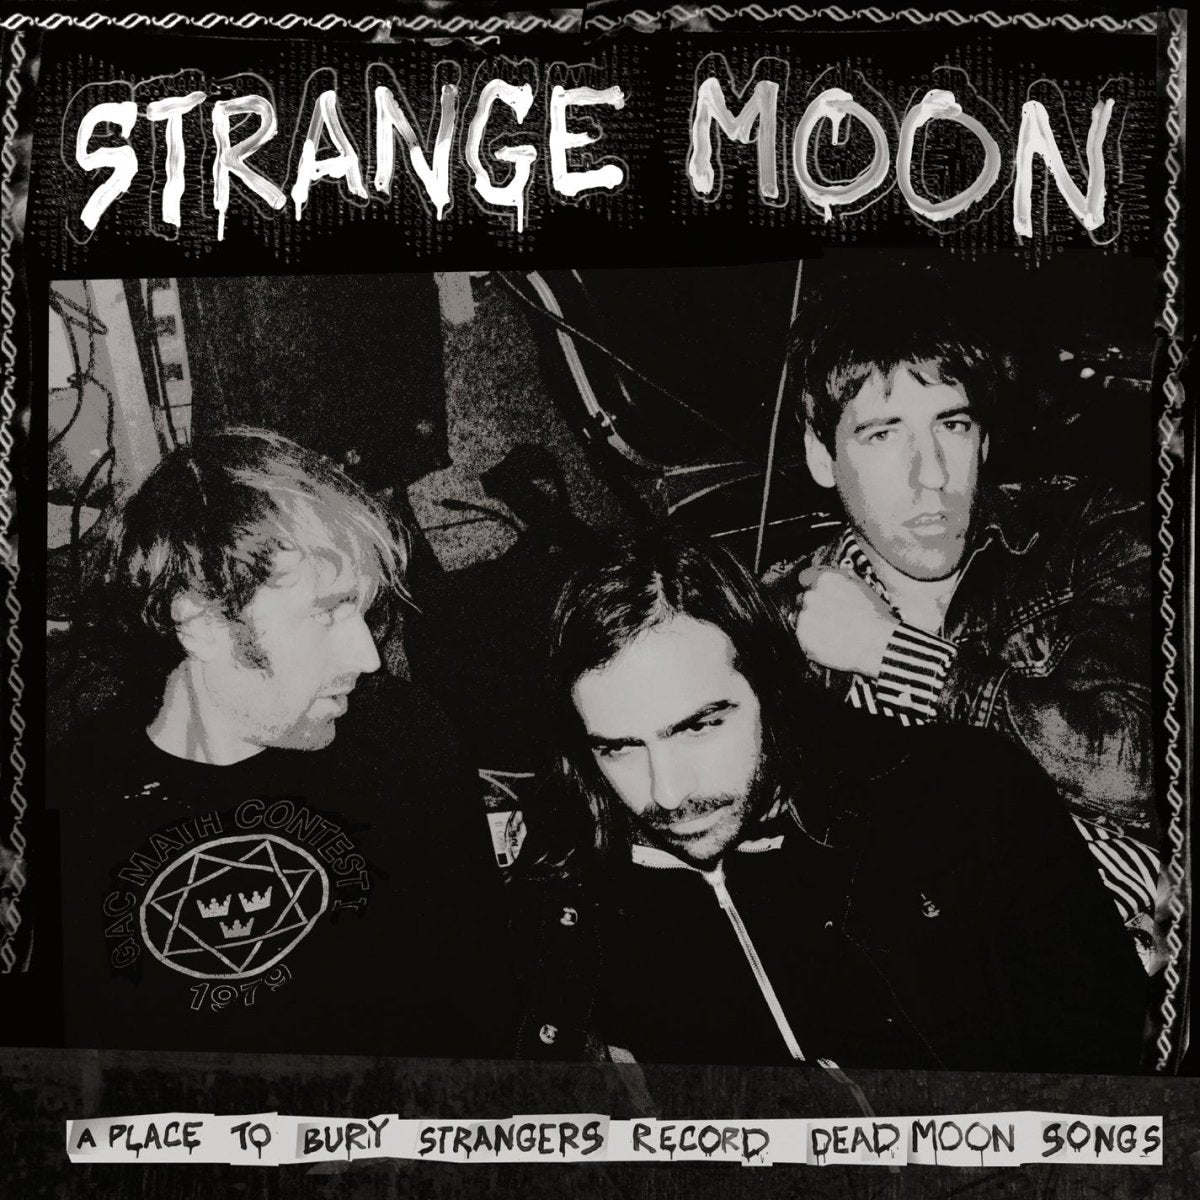 A Place To Bury Strangers - Strange Moon Records & LPs Vinyl